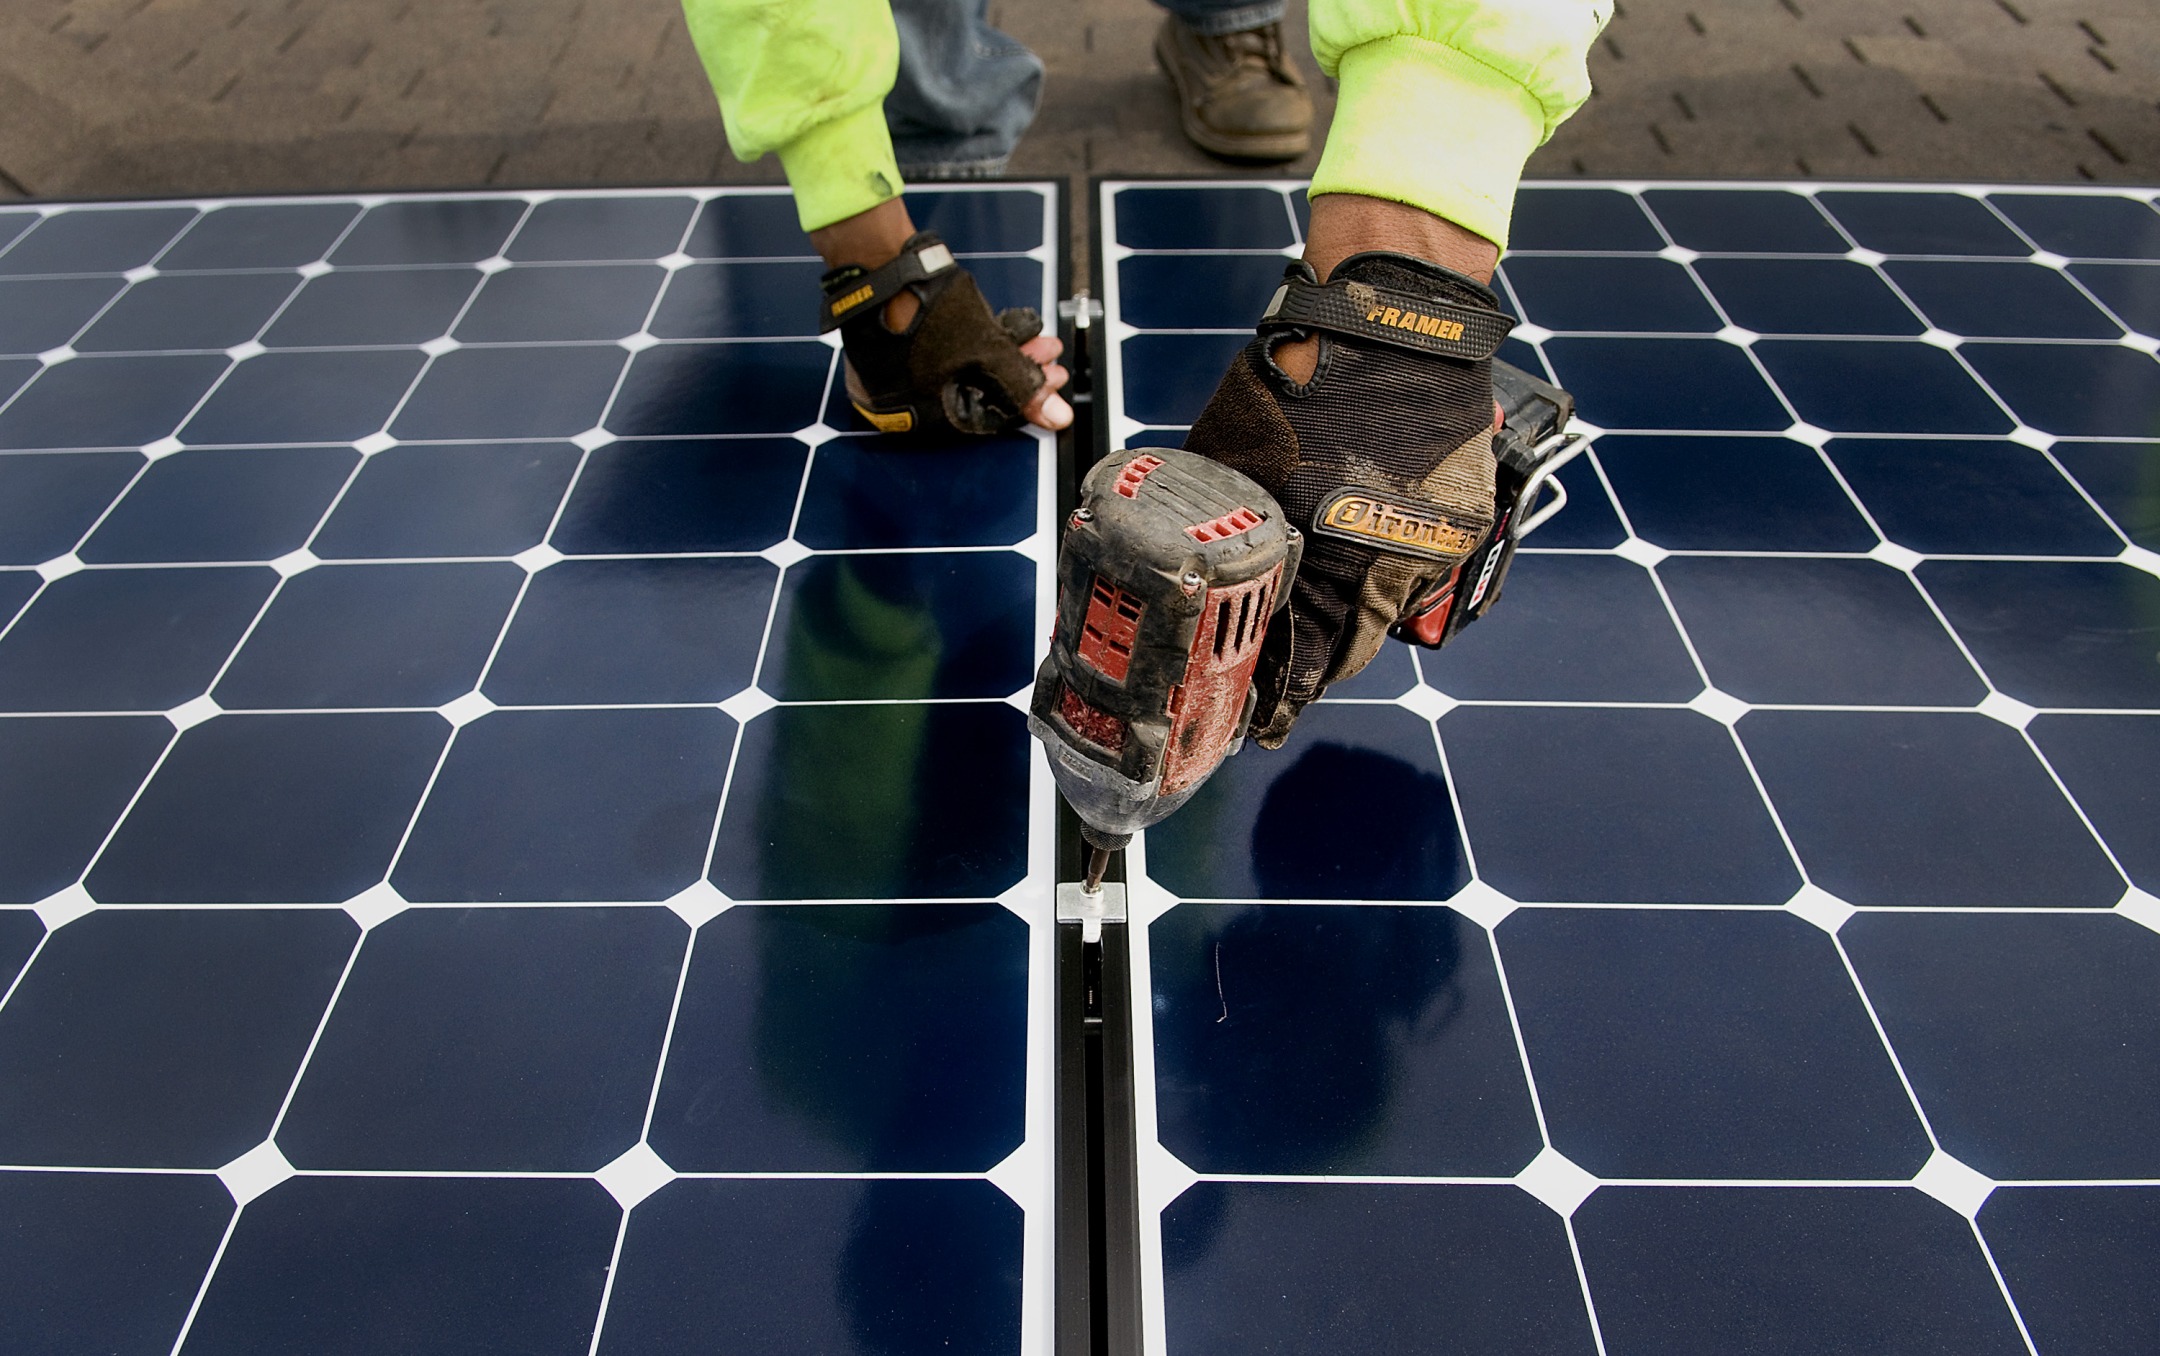 An installer secures a solar panel during installation at a home in Encinitas, California.